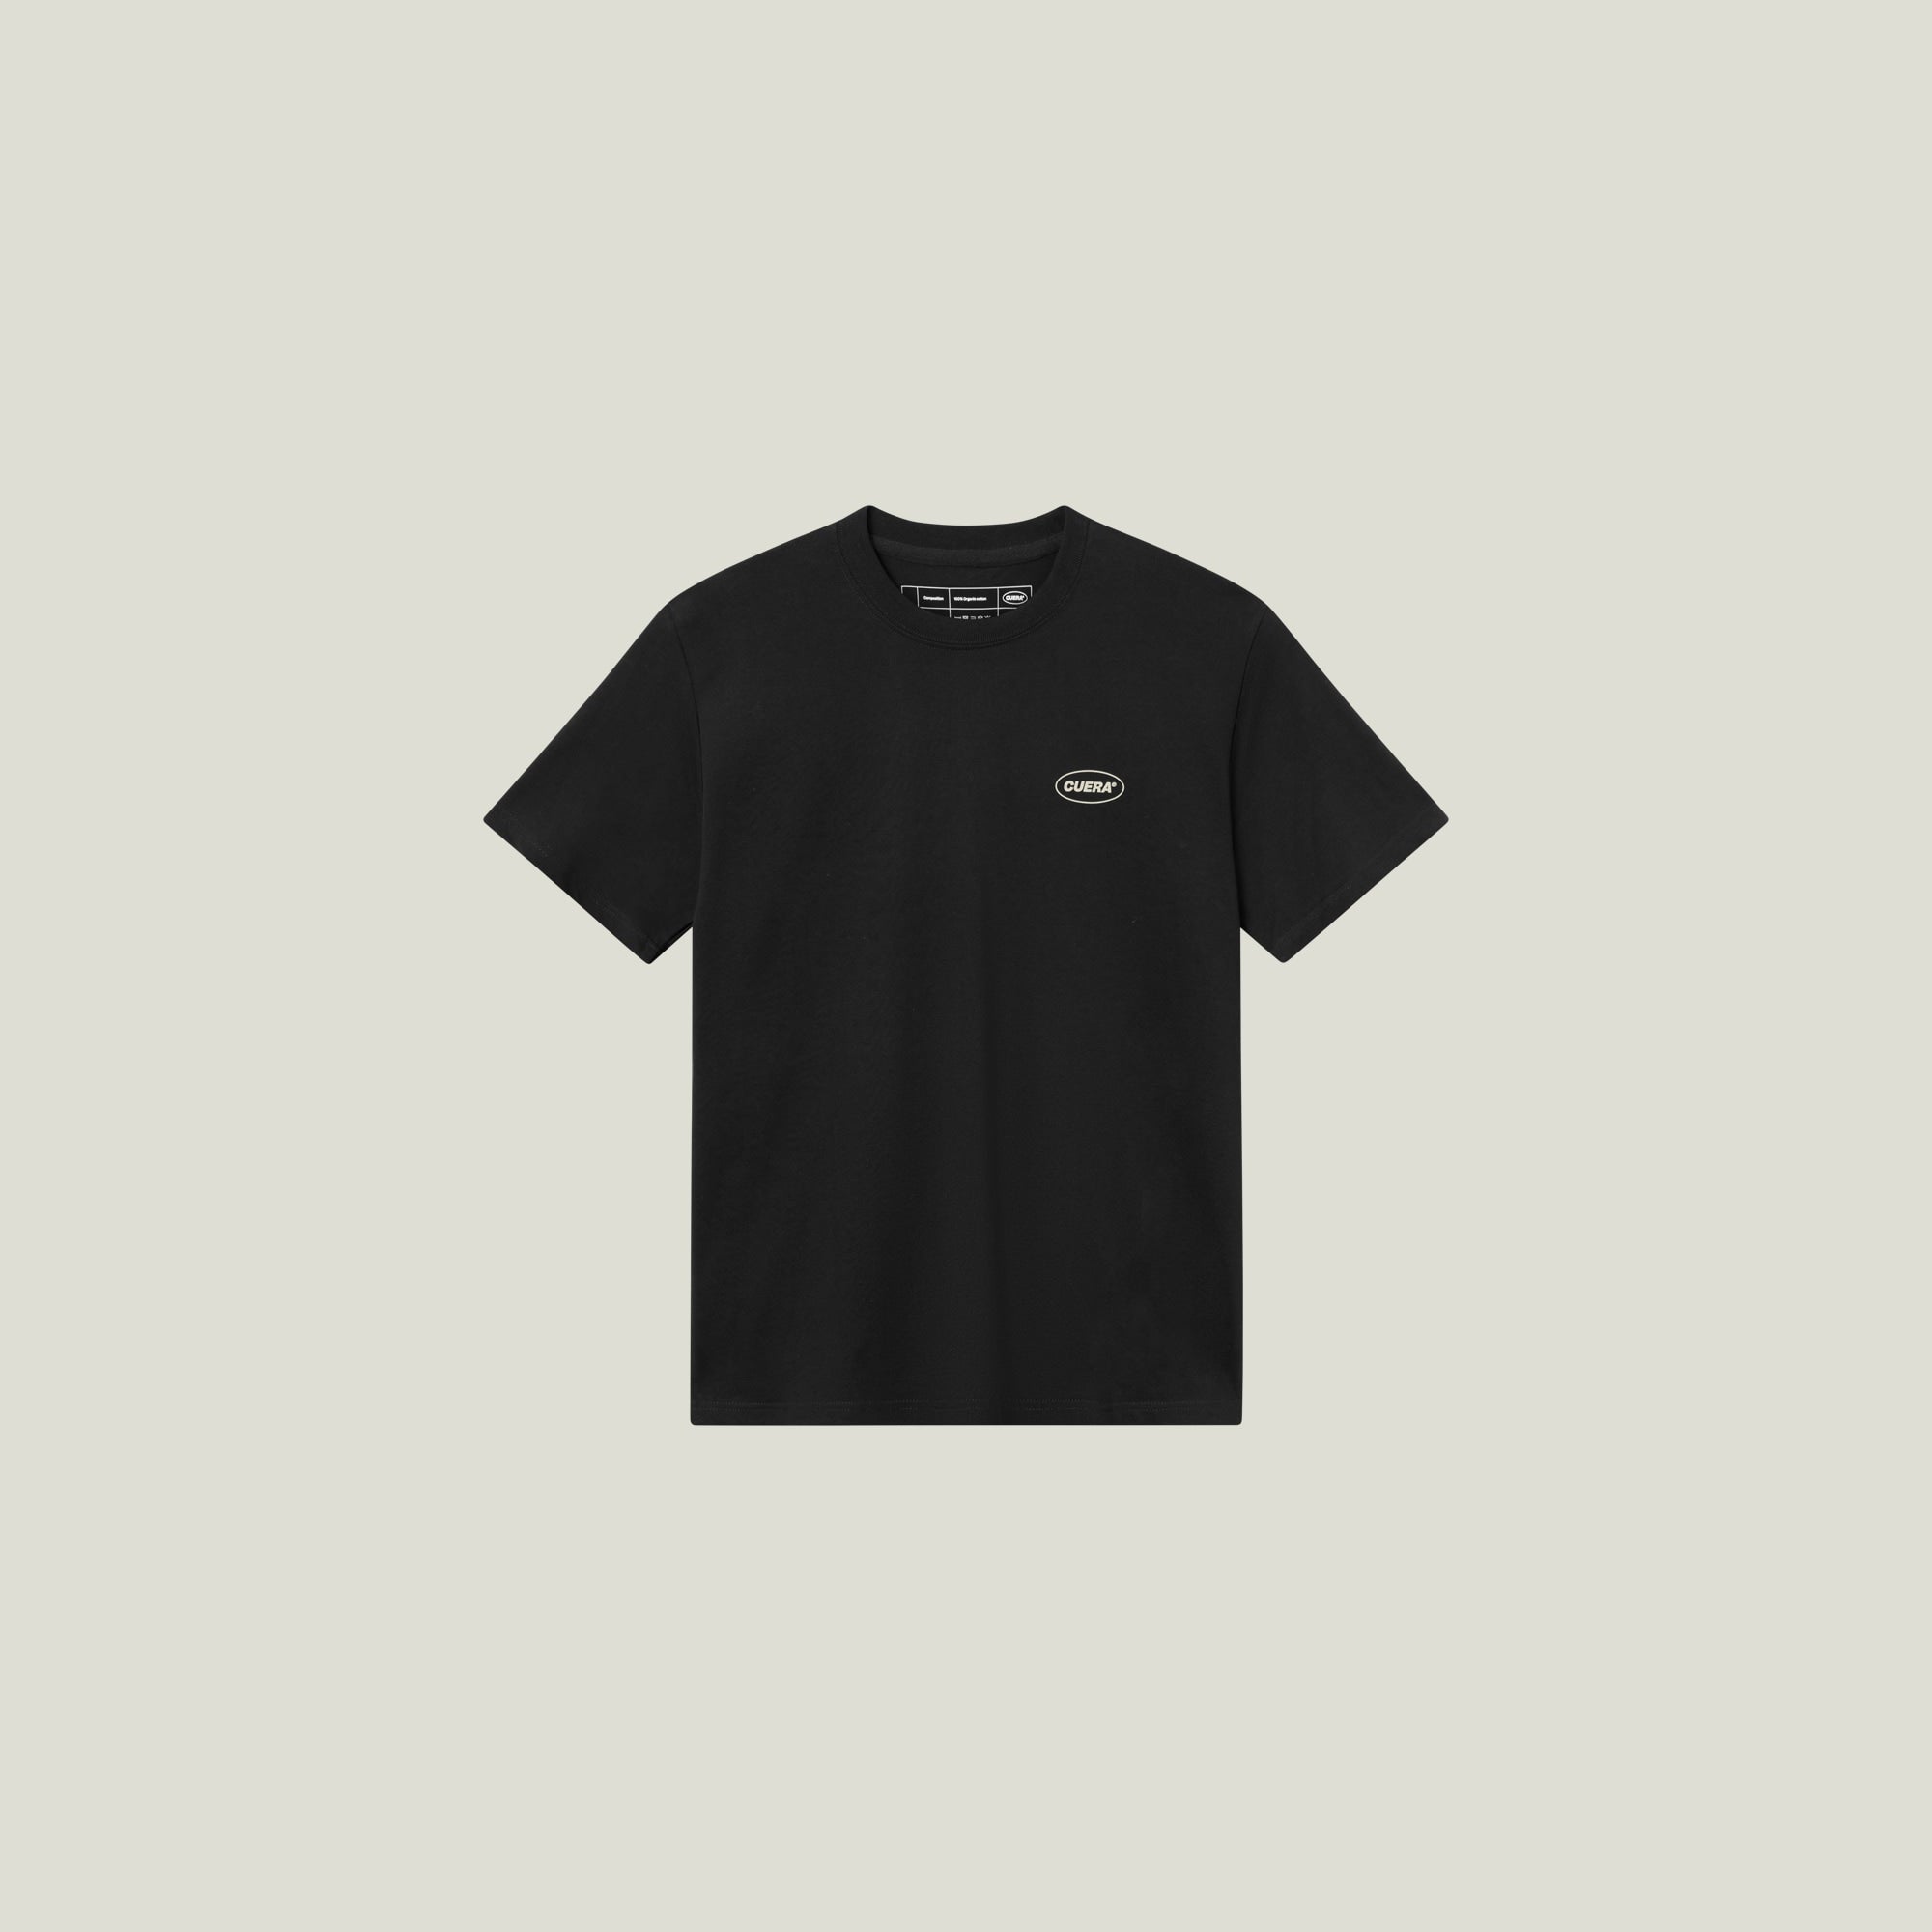 Relaxed Heavy Offcourt T-Shirt - Black